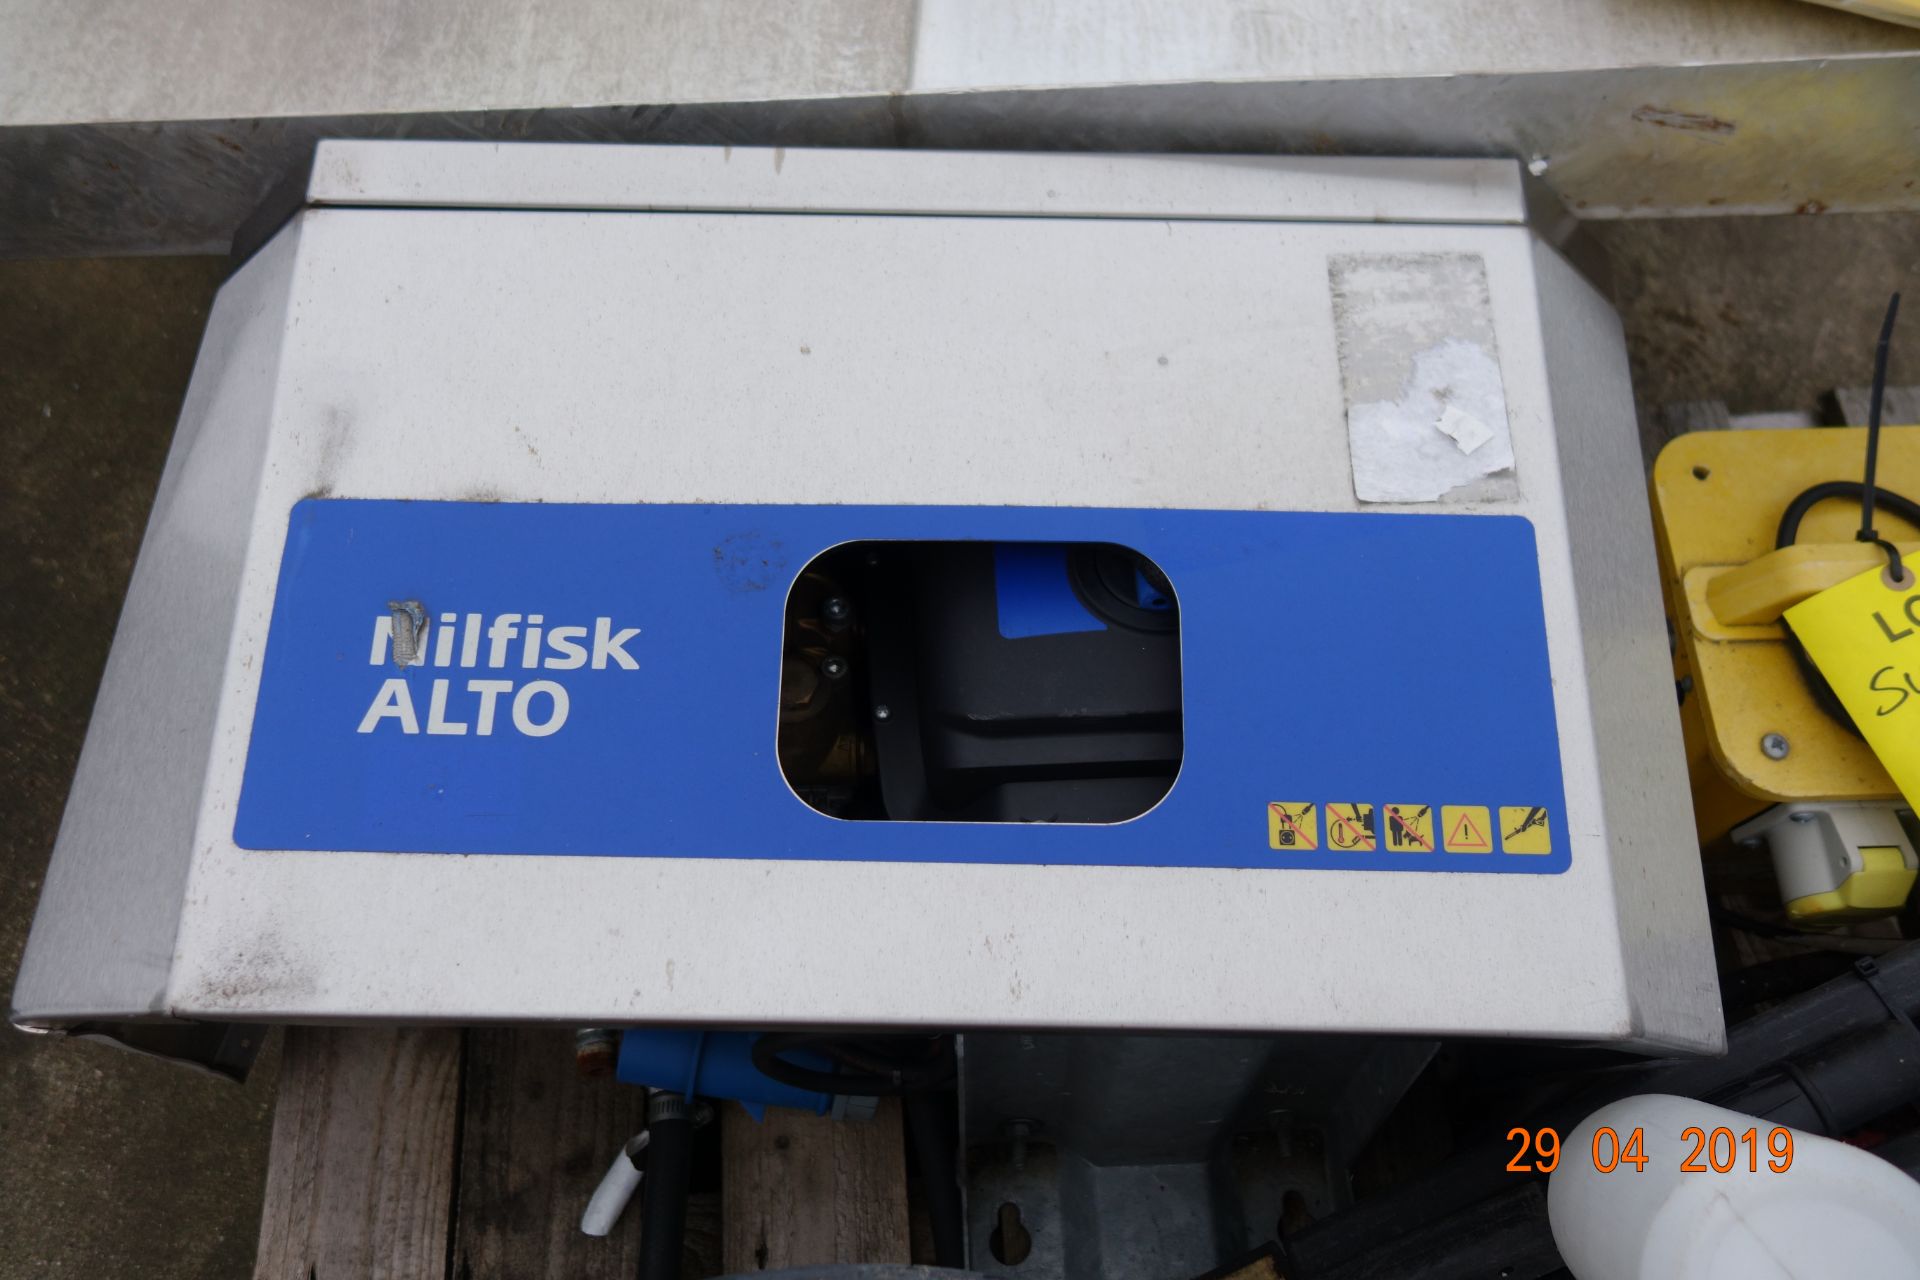 Nilfisk Alto Wall Mounted Pressure Washer, 110V - Image 2 of 3